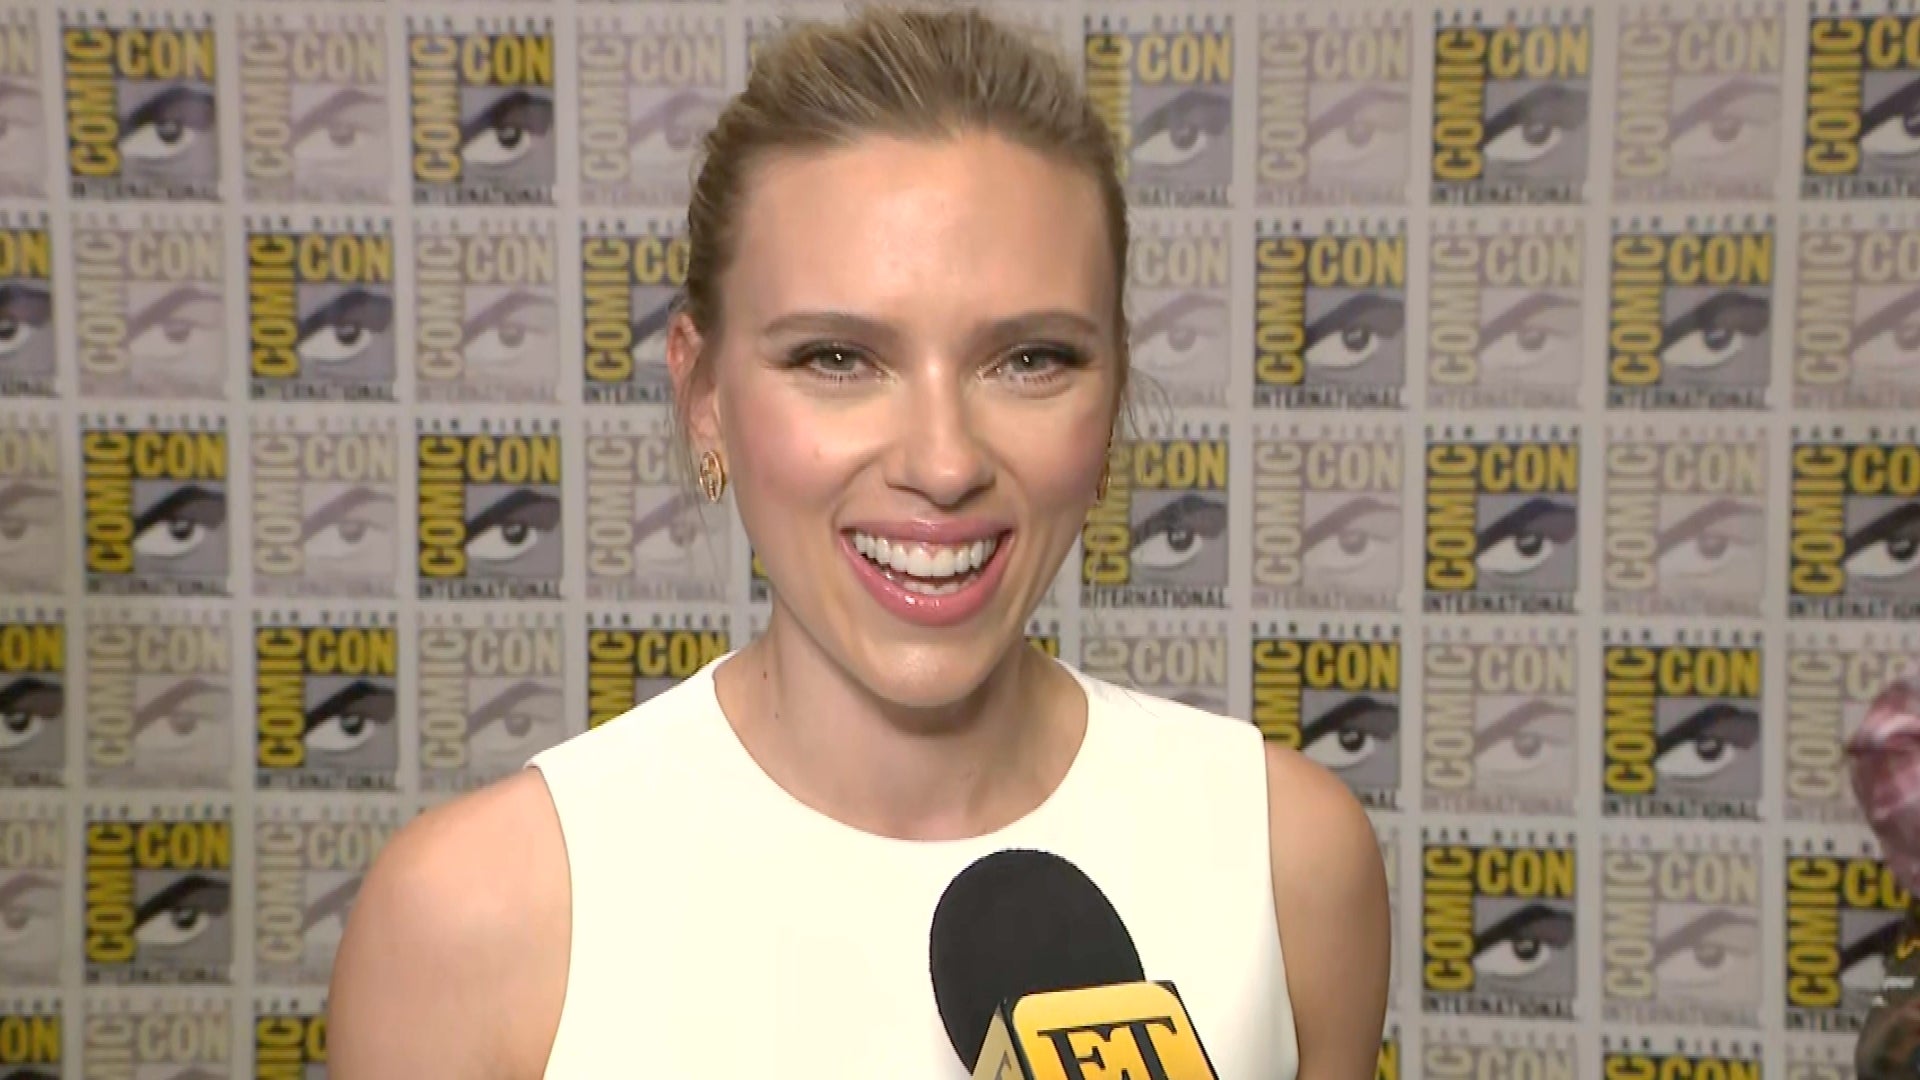 Scarlett Johansson Is Talking to Marvel About Multiple 'Black